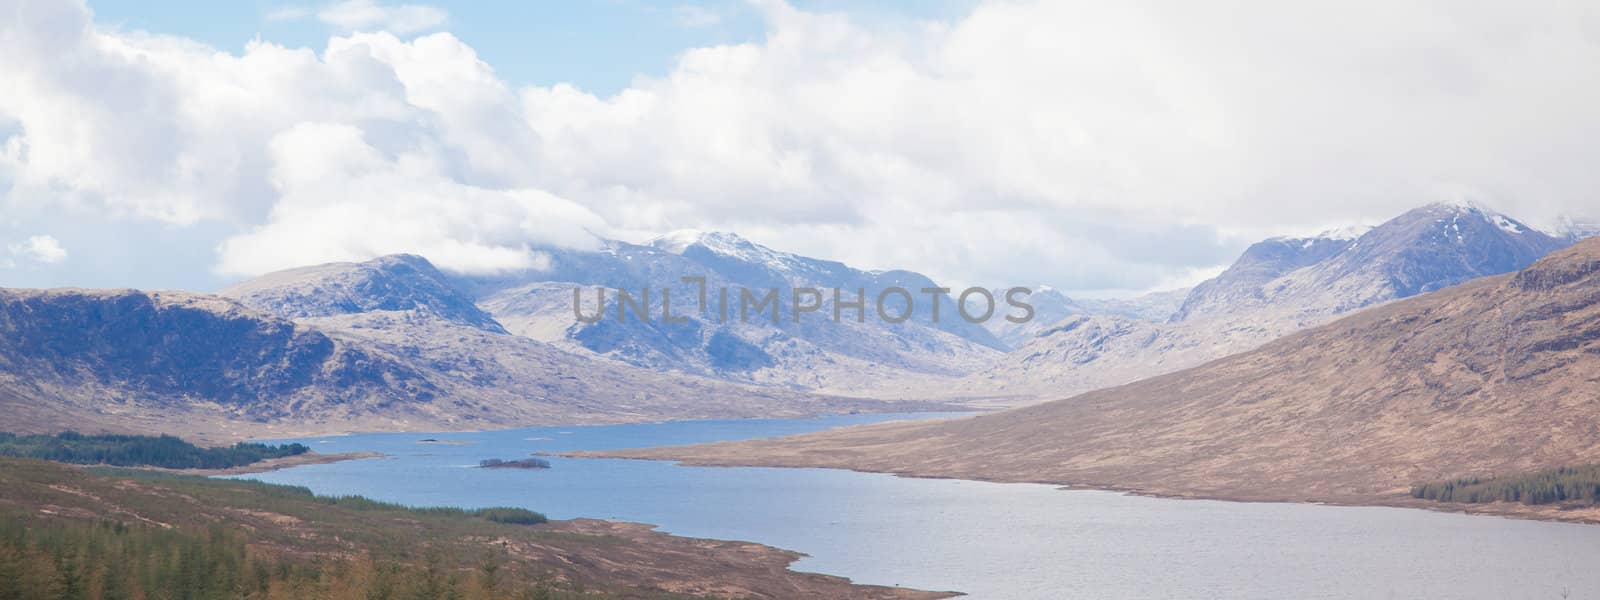 Panorama Snow Mountain range and lake Landscape at Scotland Highland area United Kingdom